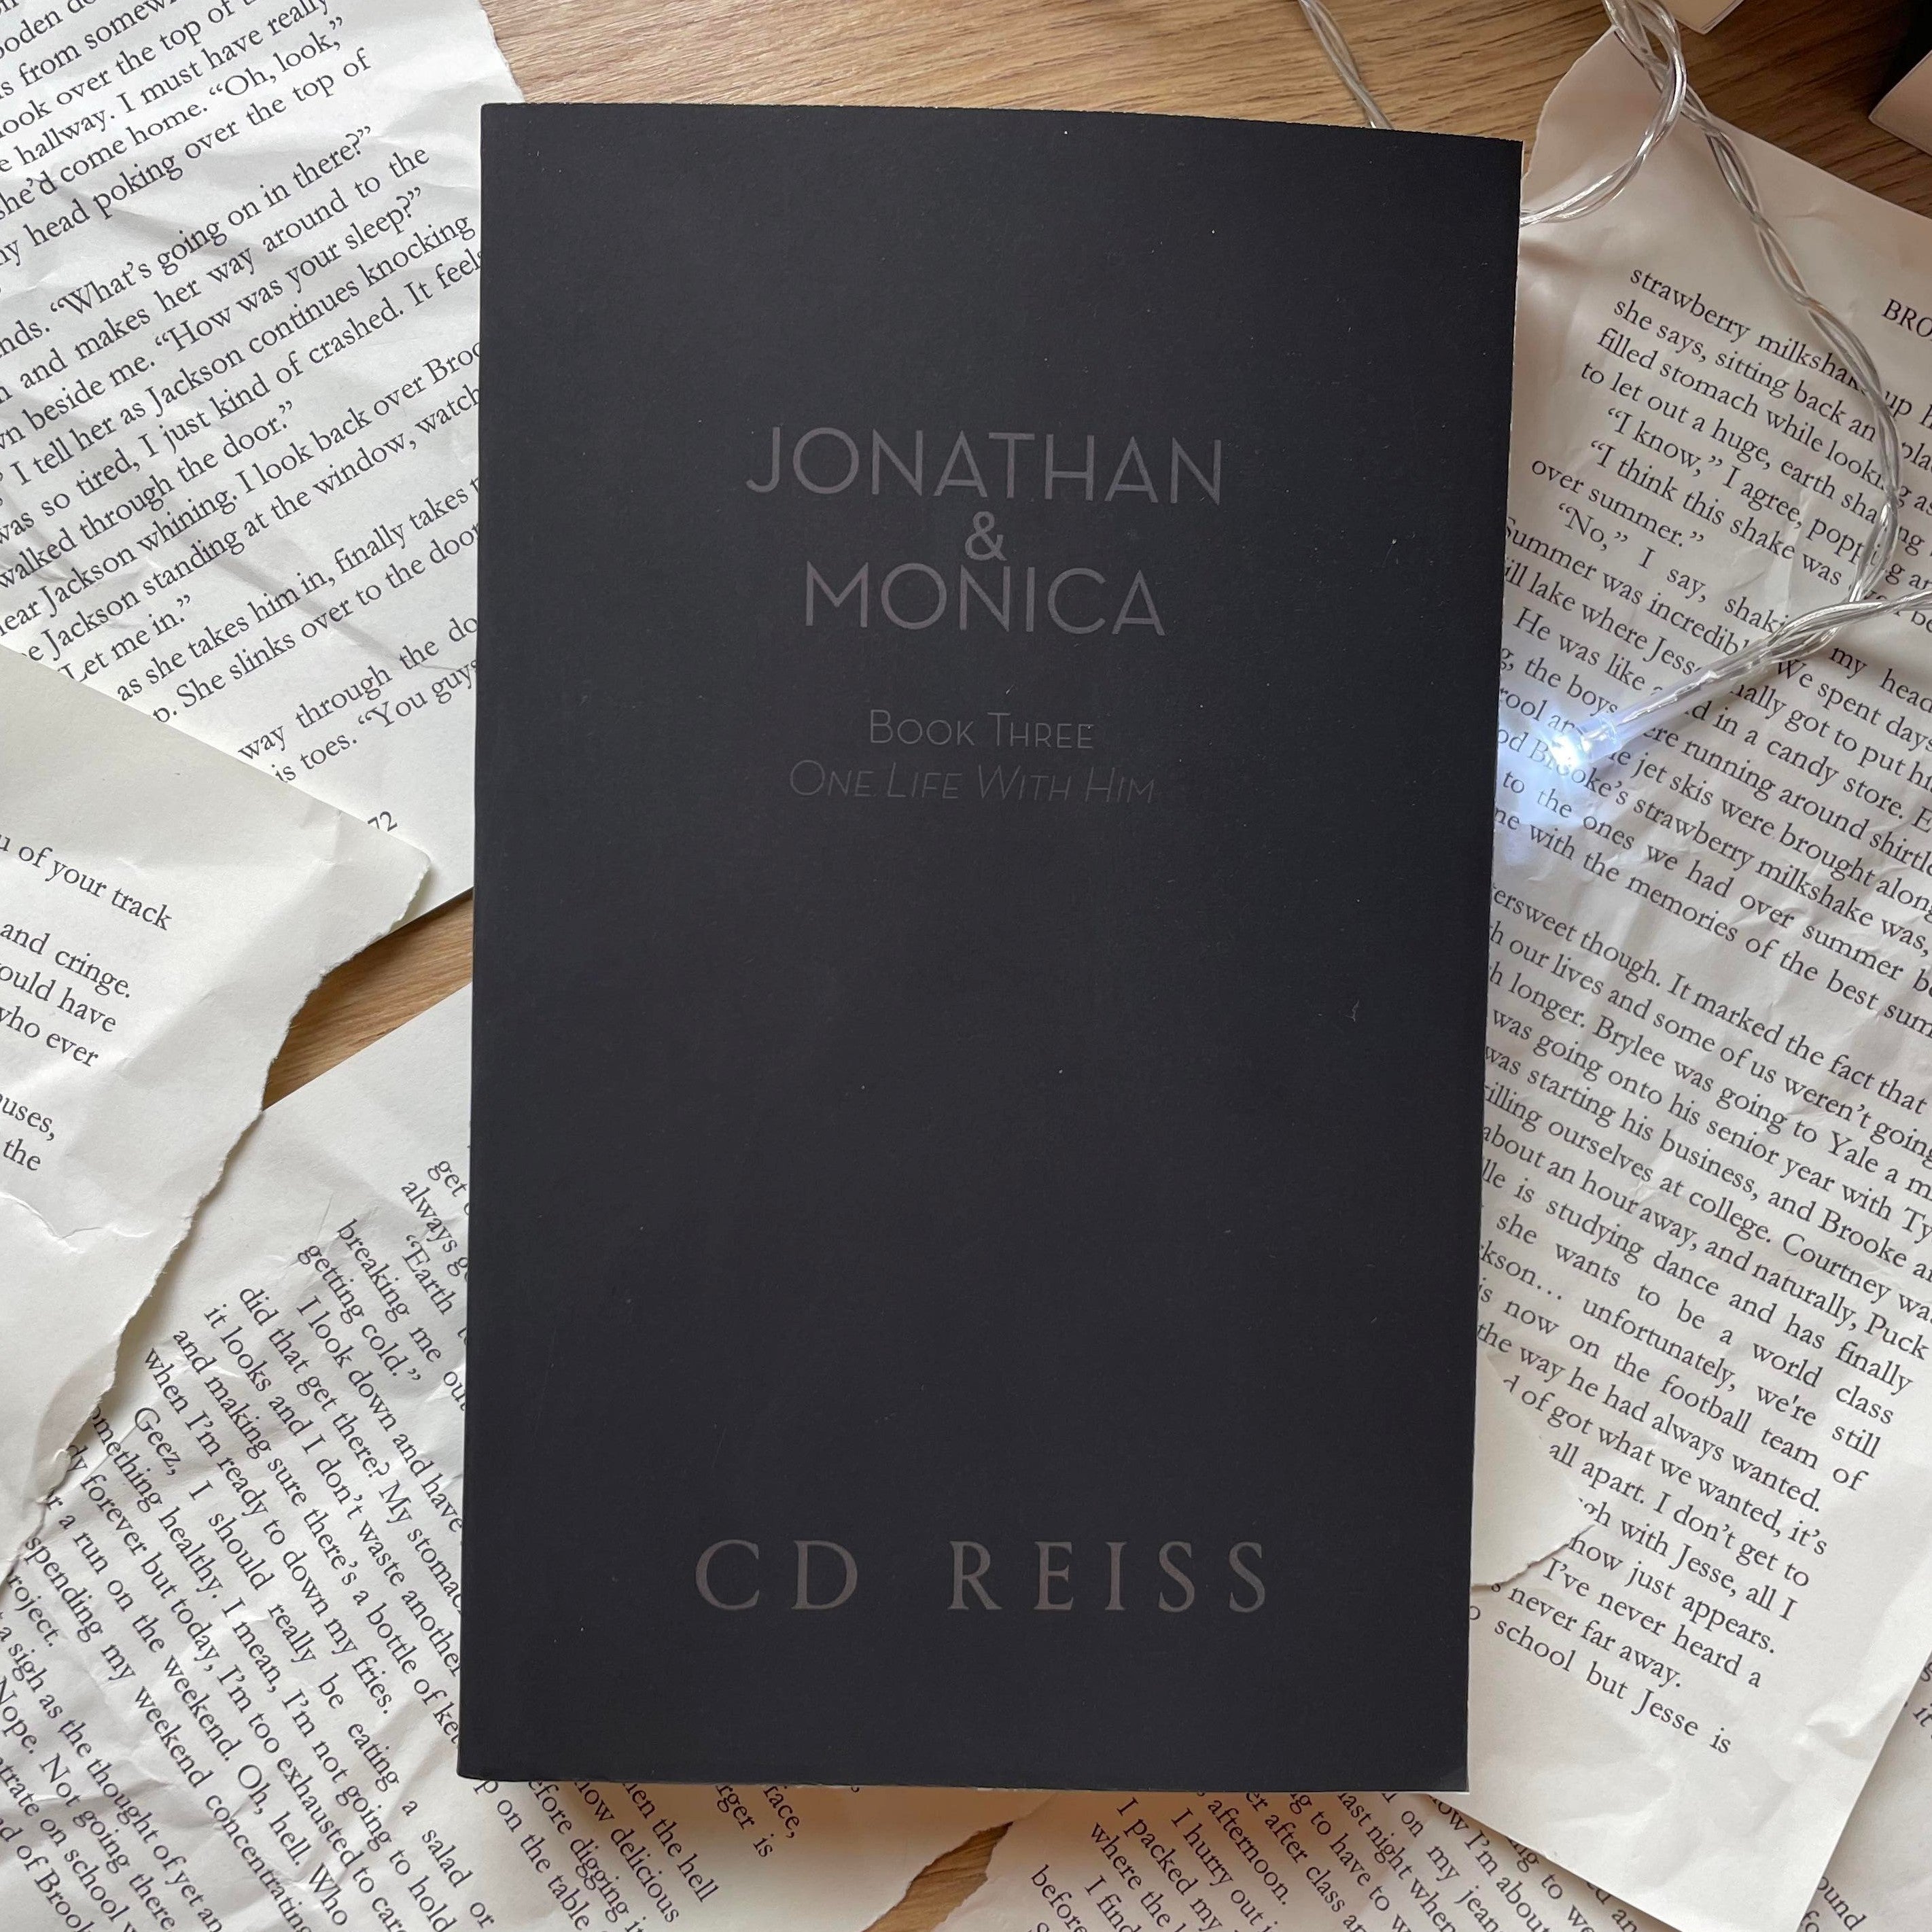 Monica & Jonathan by CD Reiss